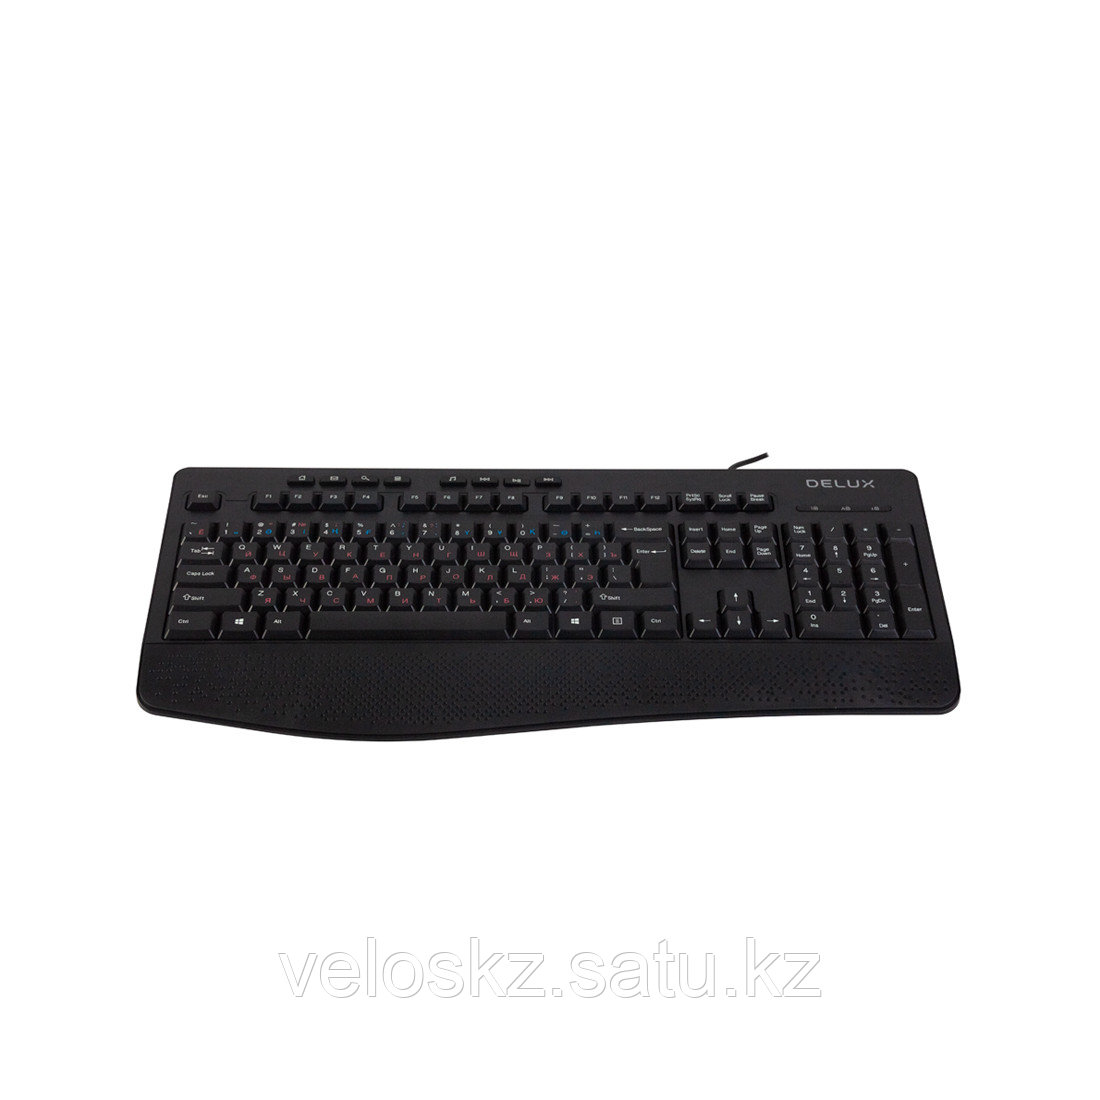 Клавиатура, Delux, DLK-6060UB, USB, Кол-во стандартных клавиш 104, 8 мультимедиа-клавиш, 1,6м